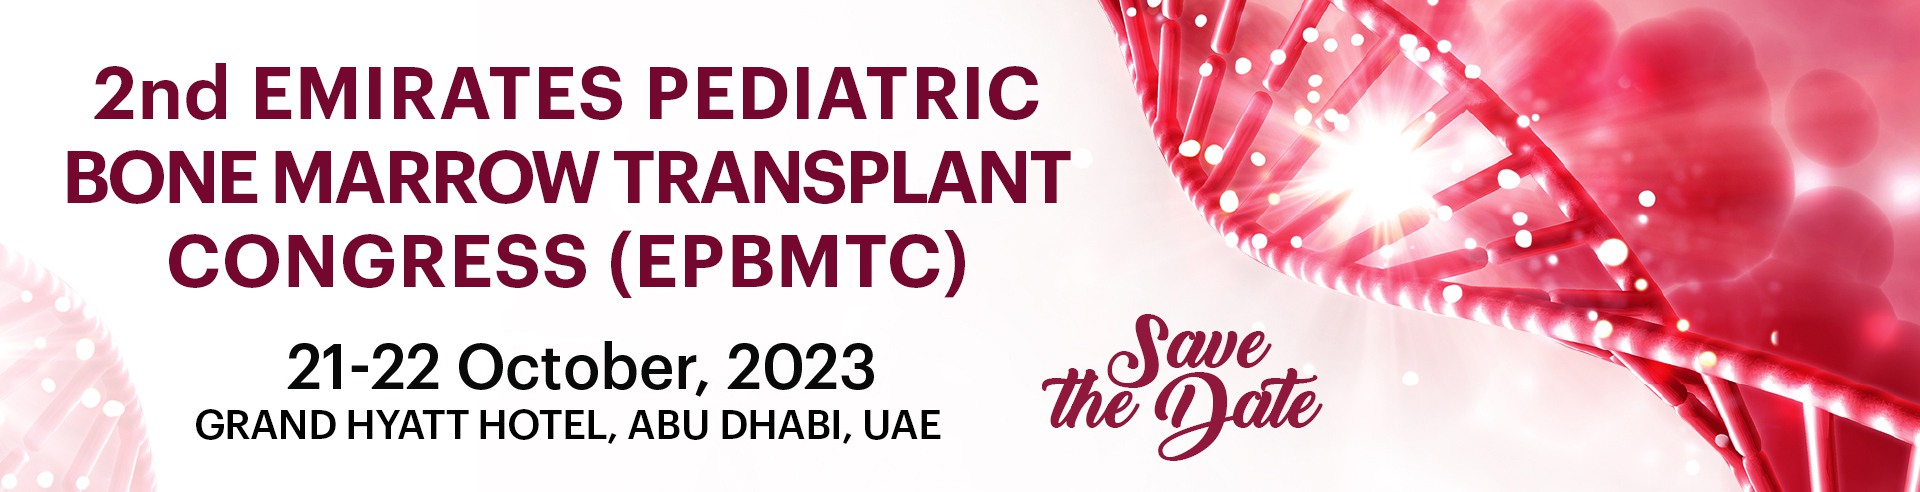 2nd Emirates Pediatric Bone Marrow Transplant Congress